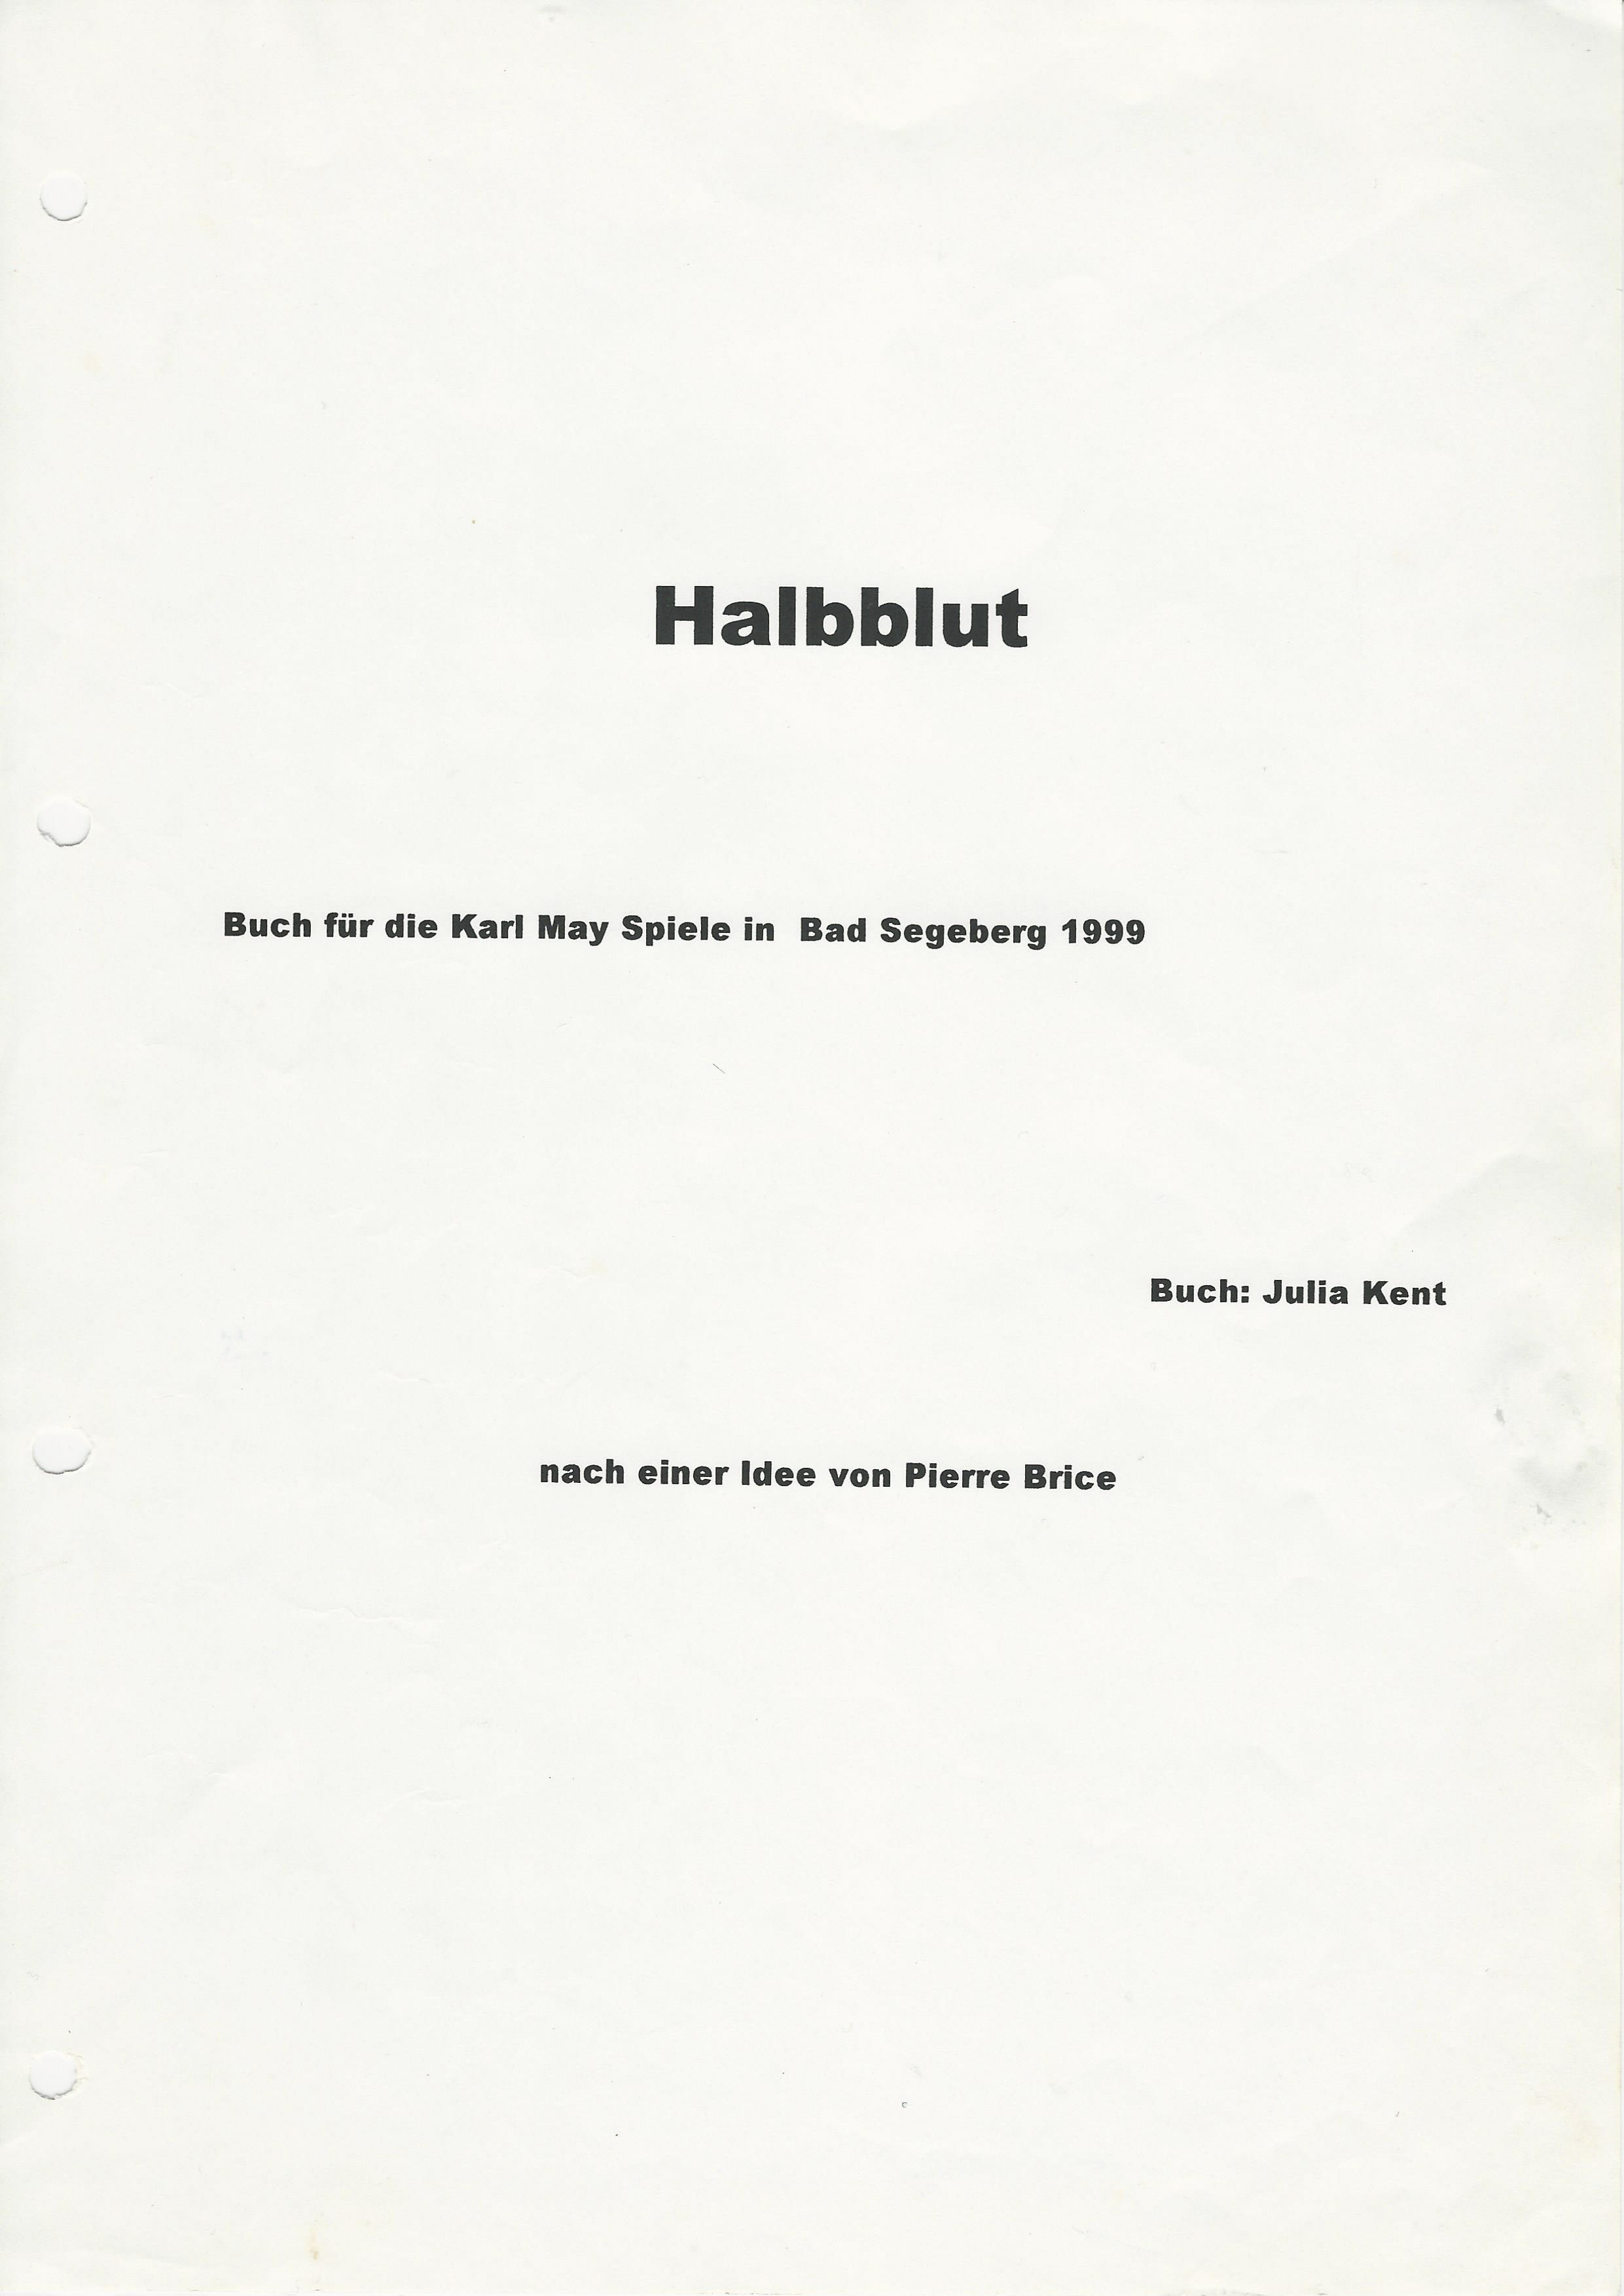 Bad Segeberg ''Halbblut'', 1999